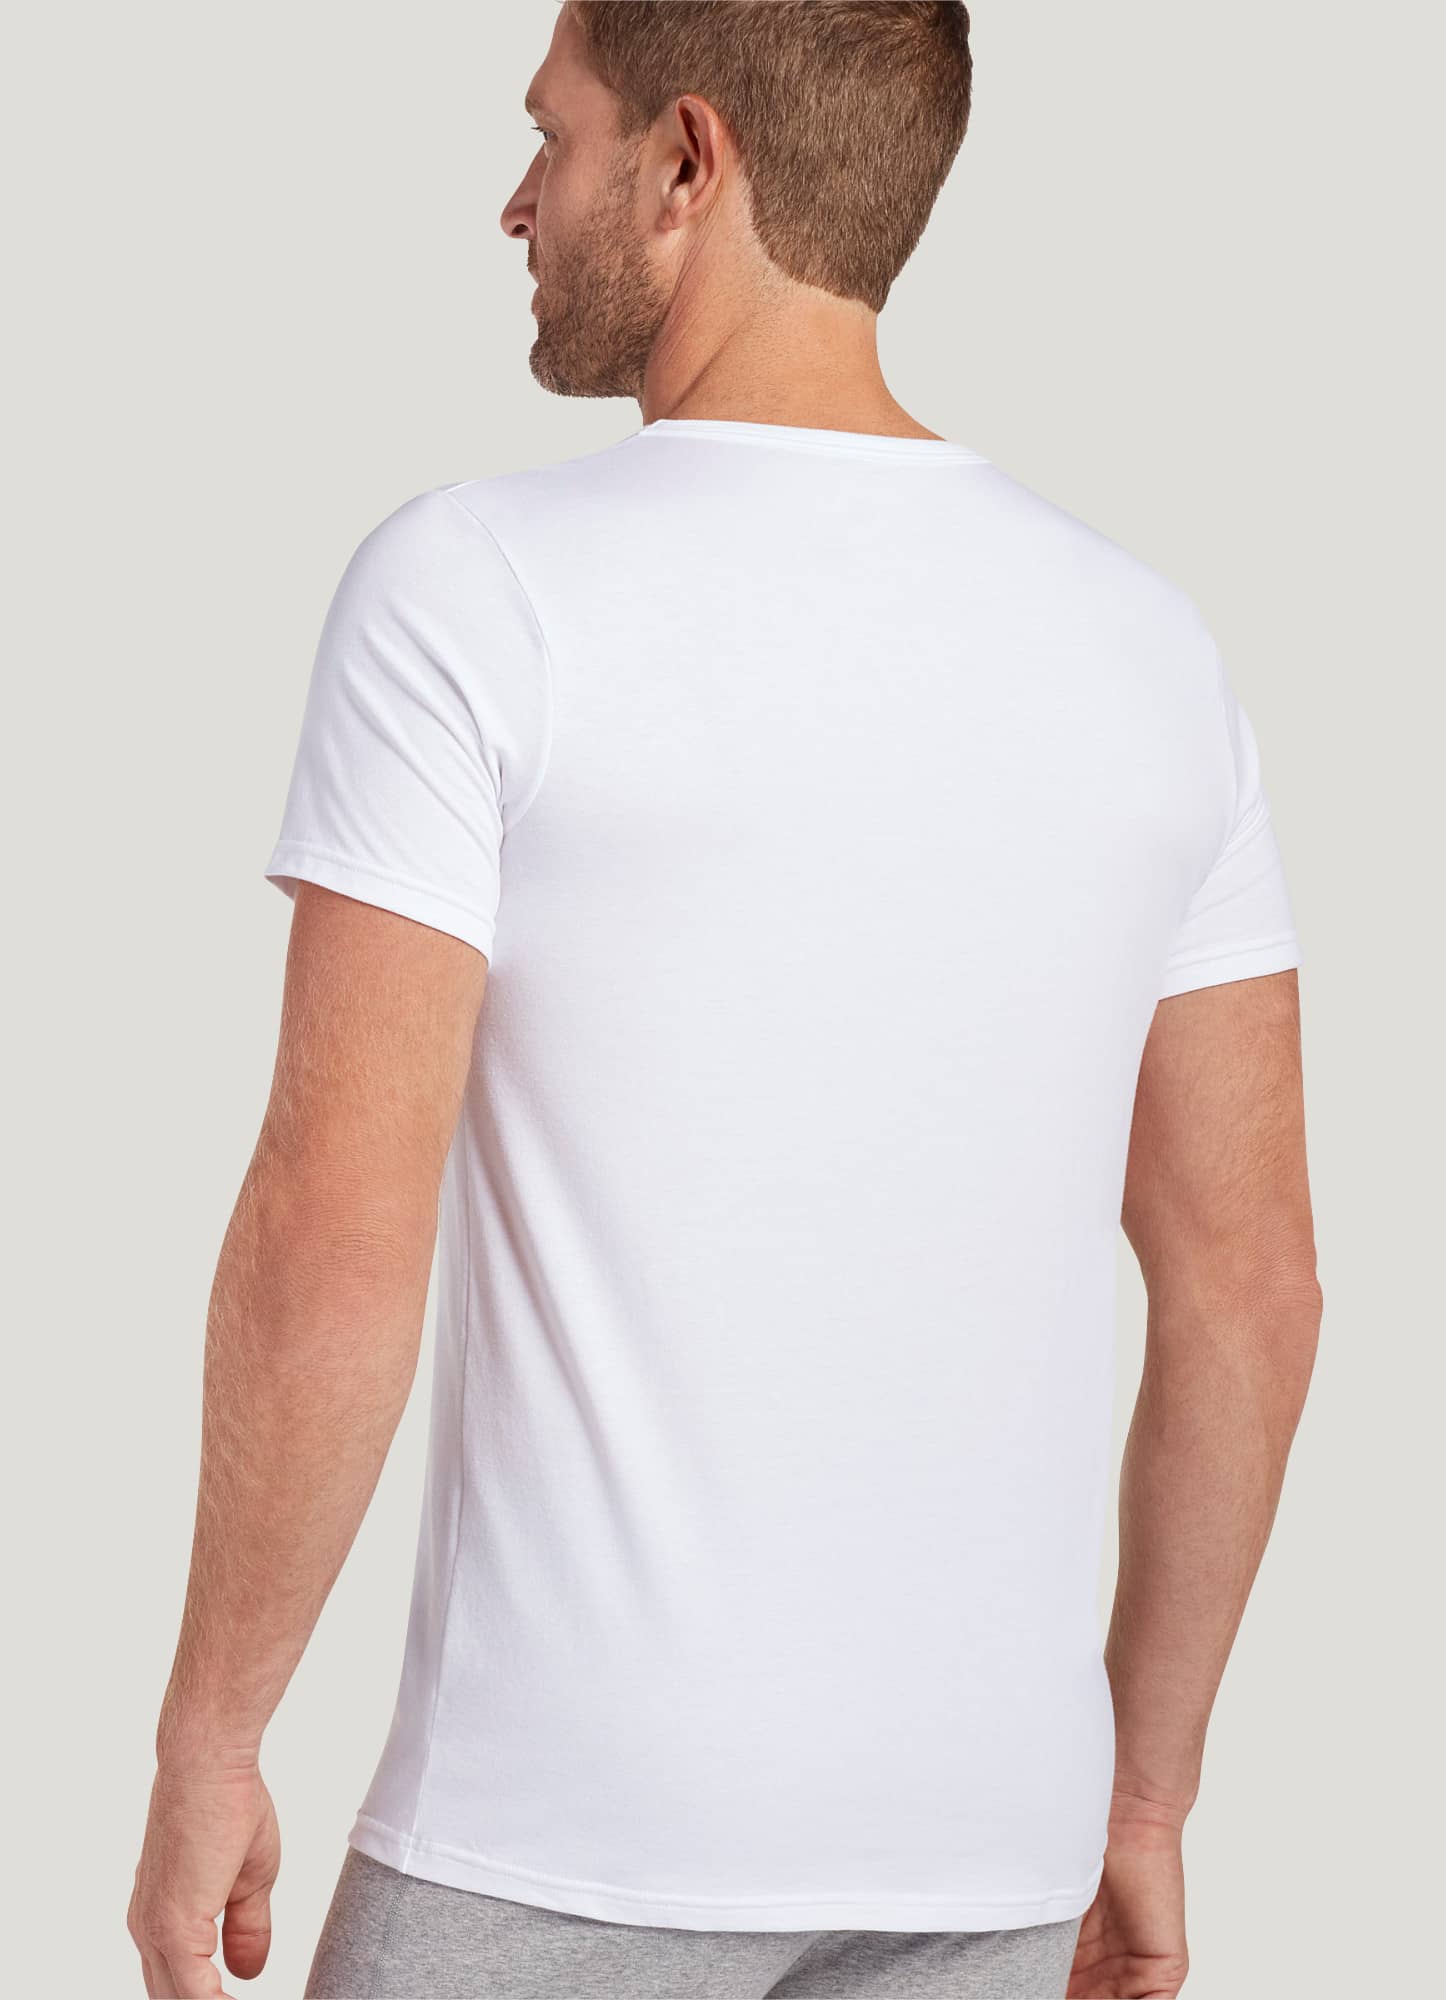 Jockey Slim Fit Cotton Stretch V-Neck T-Shirt - 2 Pack